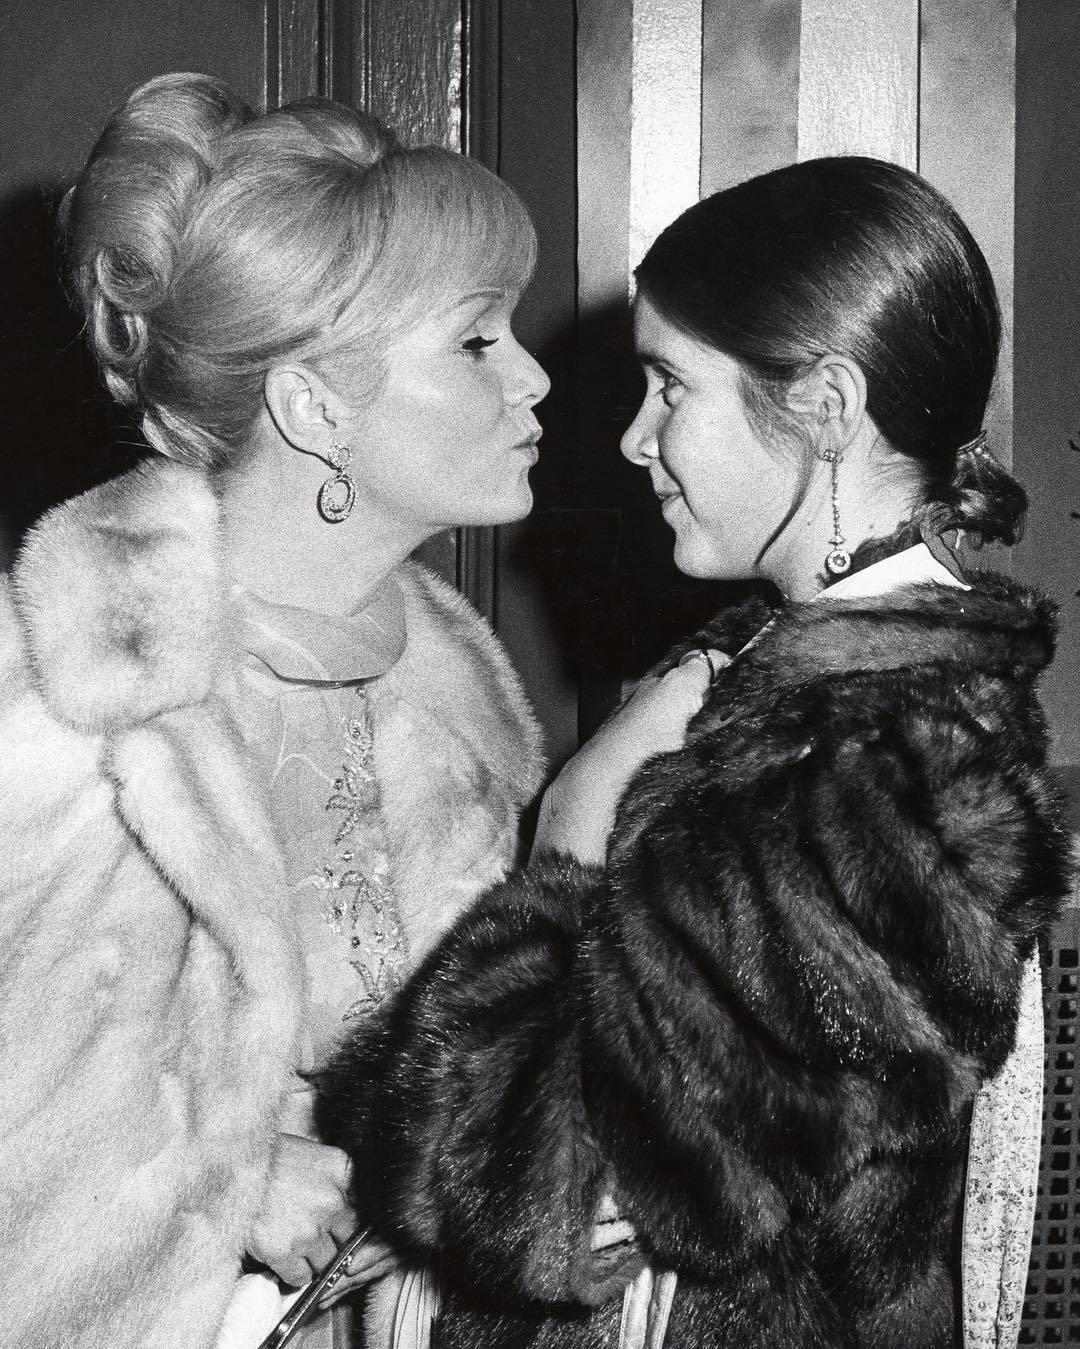 Madre e hija. Debbie Reynolds (1932-2016) y Carrie Fisher (1956-2016).